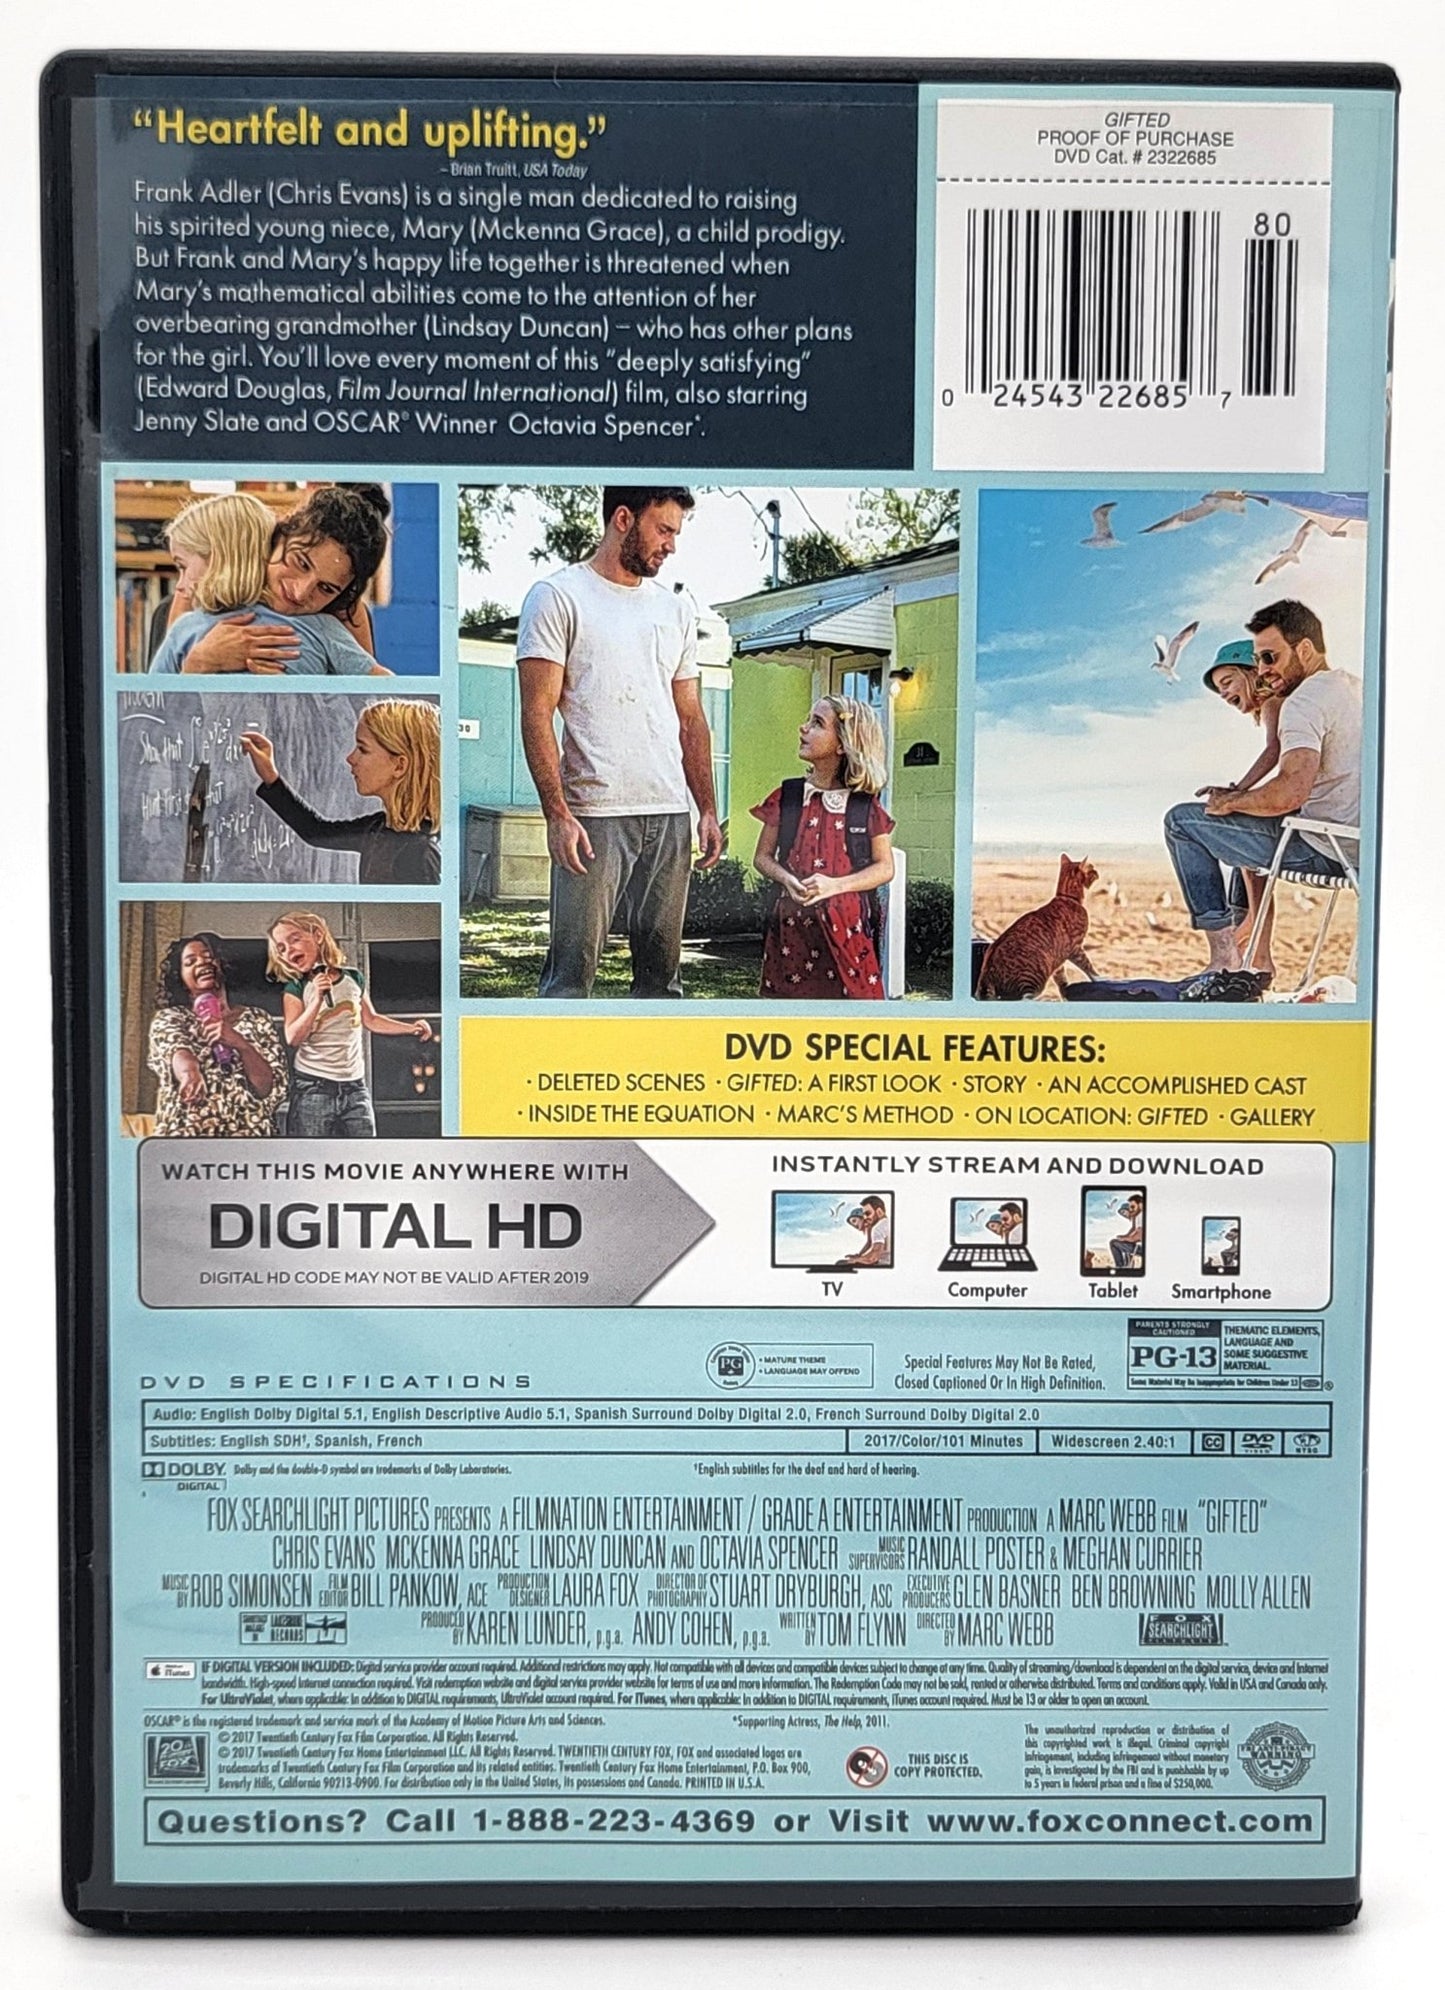 20th Century Fox Home Entertainment - Gifted | DVD - No Digital Copy - DVD - Steady Bunny Shop